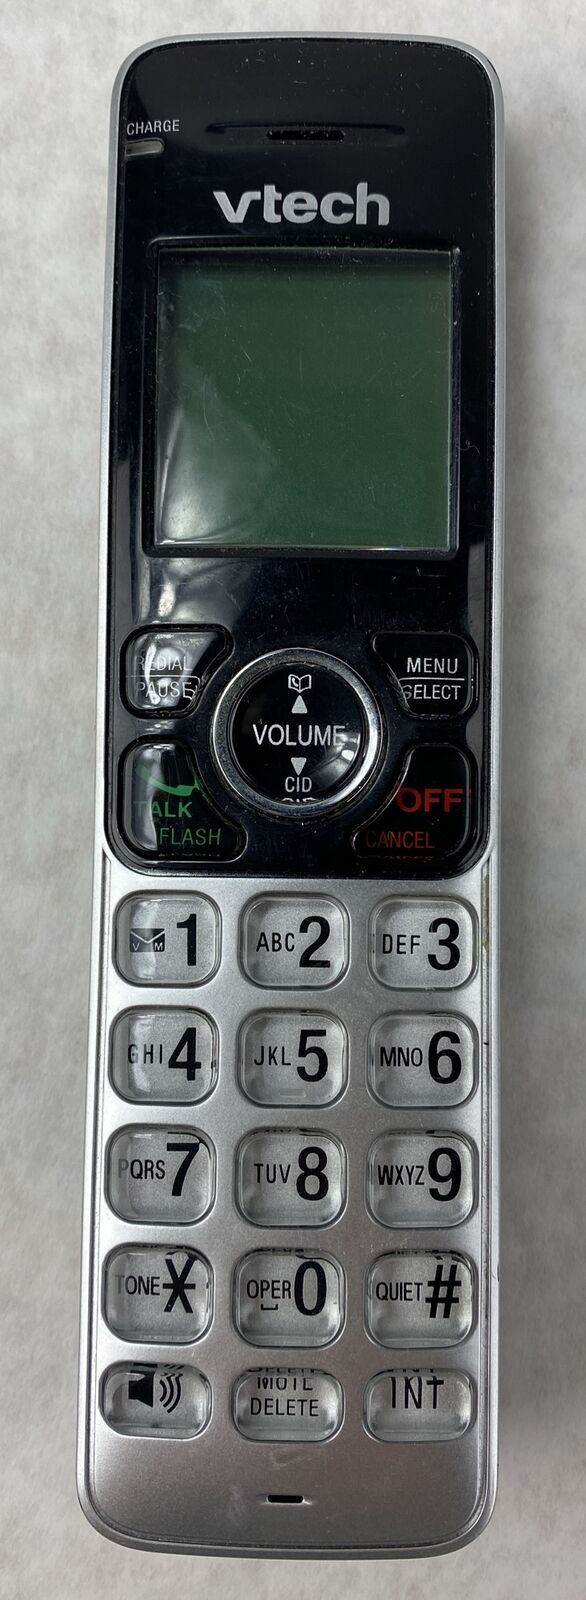 Vtech CS6649-2 Handset Telephone Phone with Charging Base